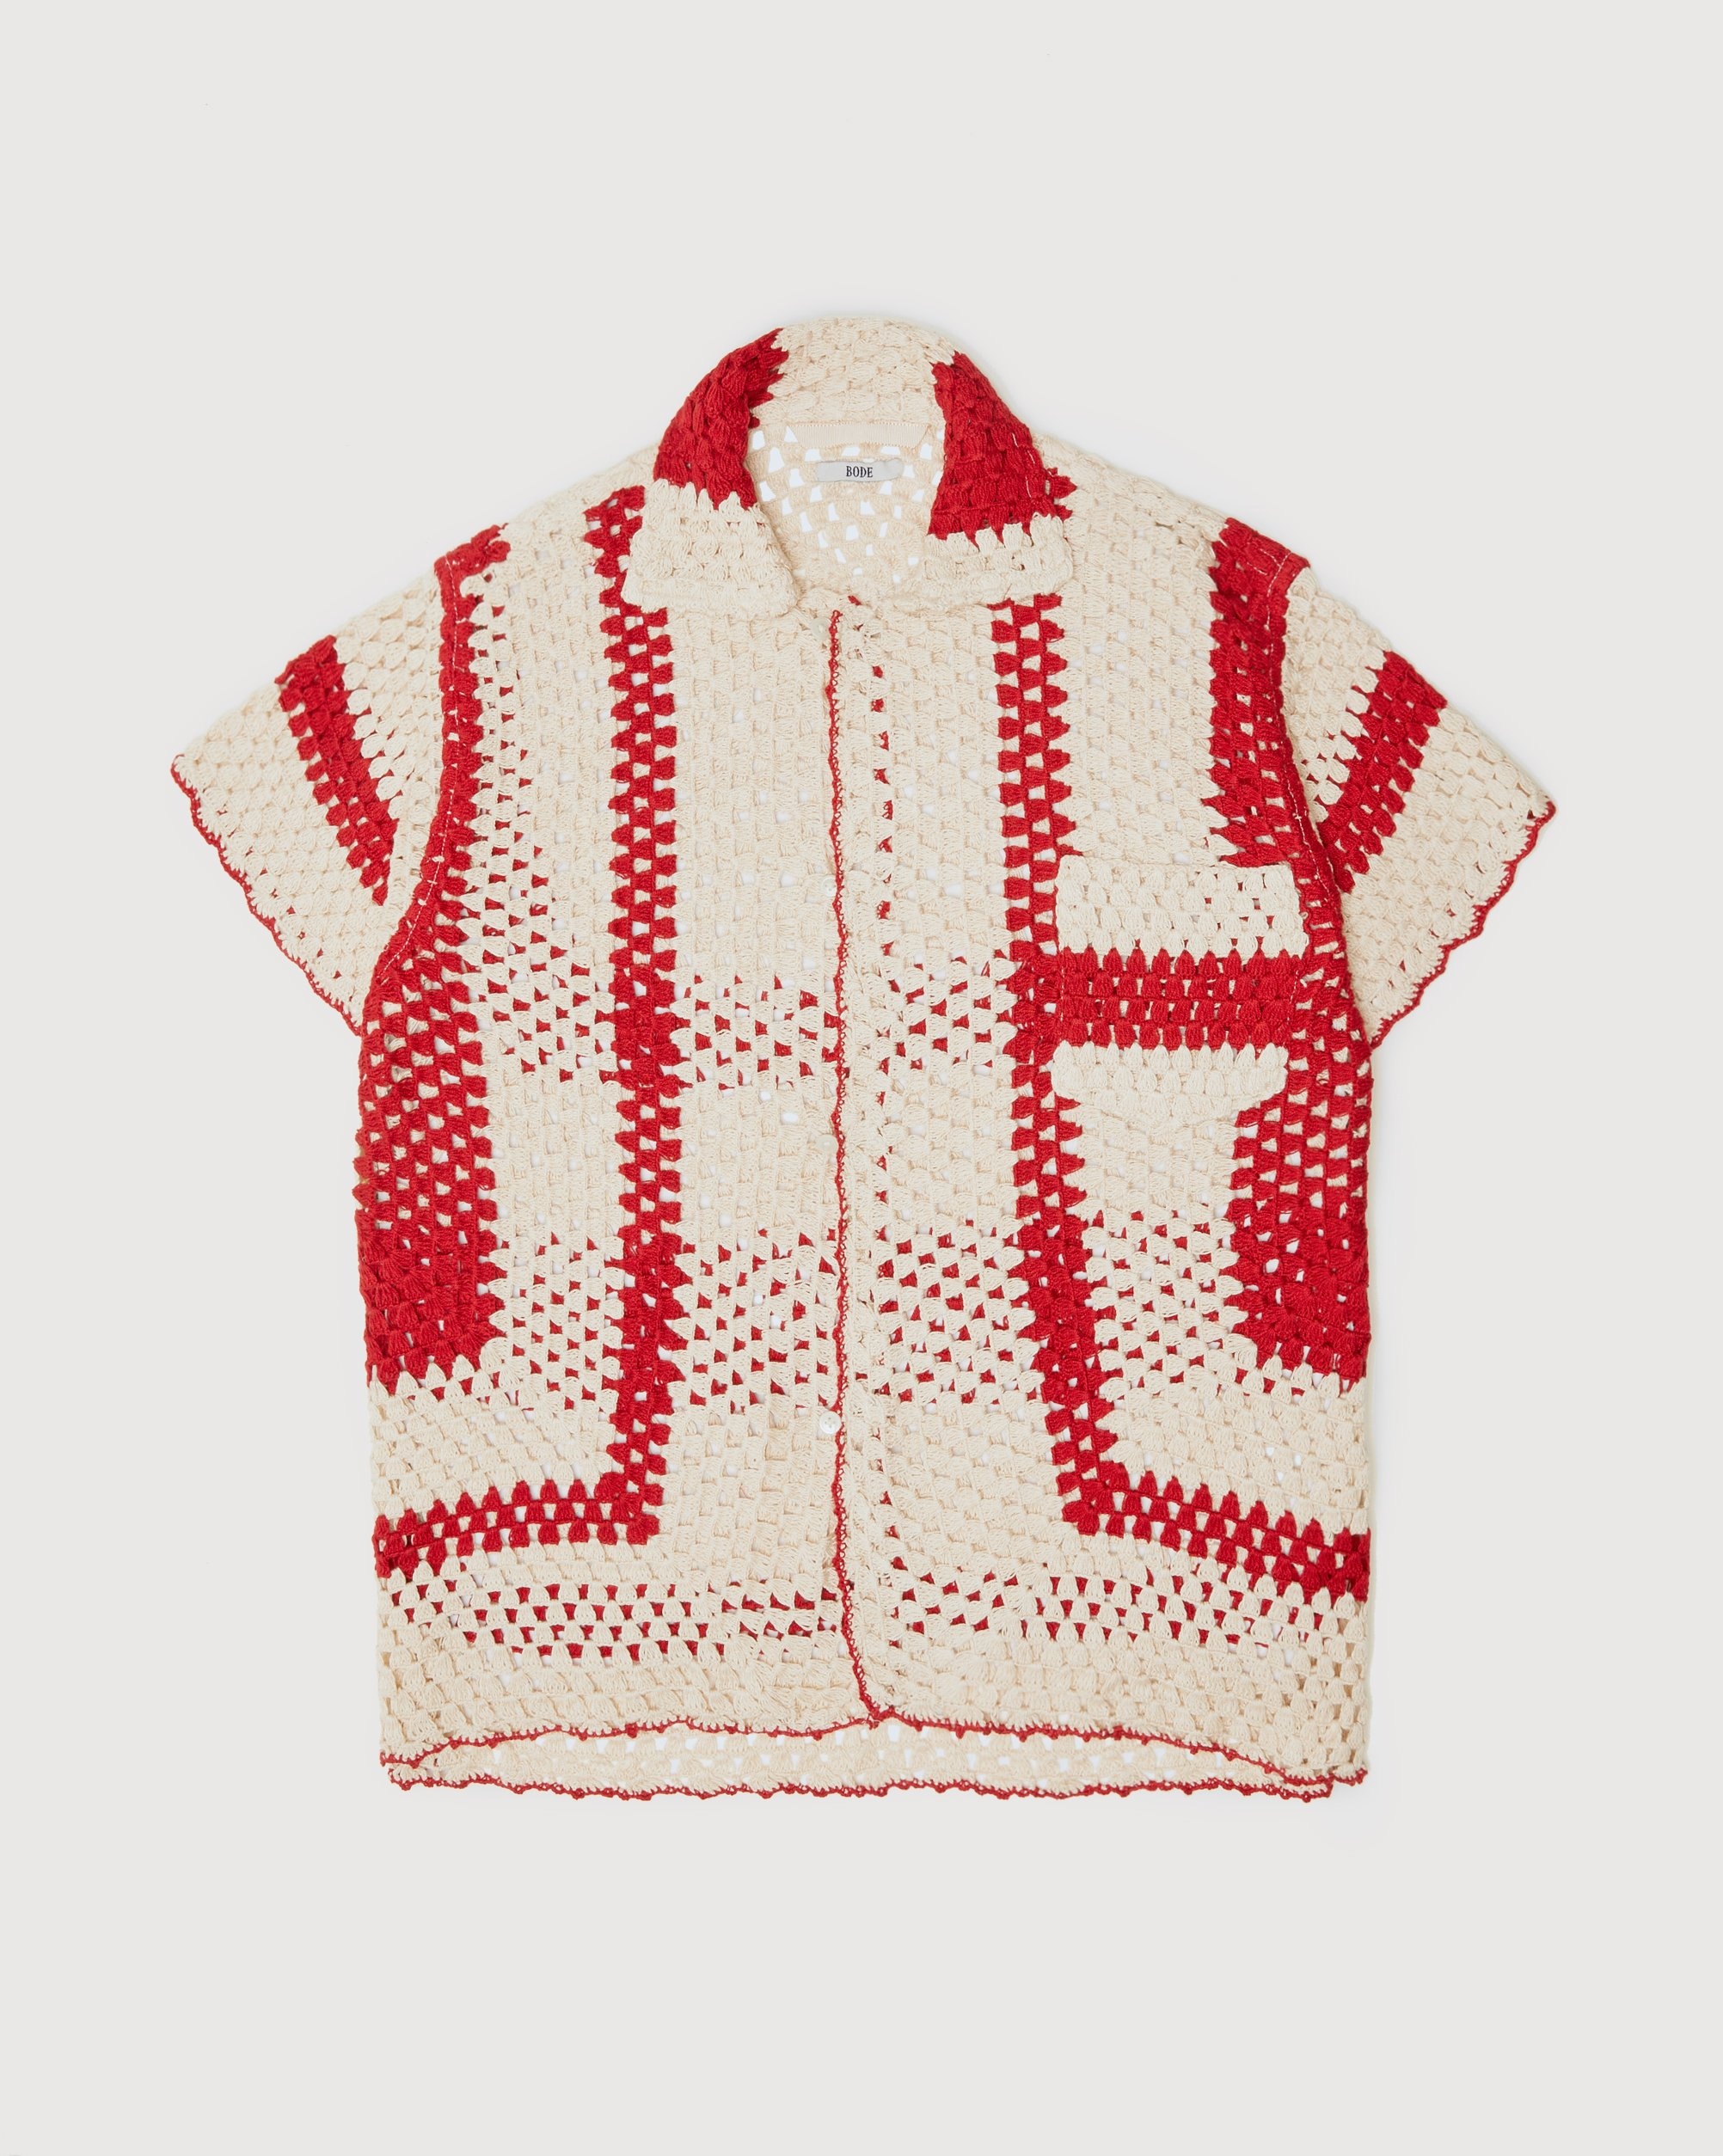 Bode – Crochet Big Top Shirt White Red - Shortsleeve Shirts - Beige - Image 1